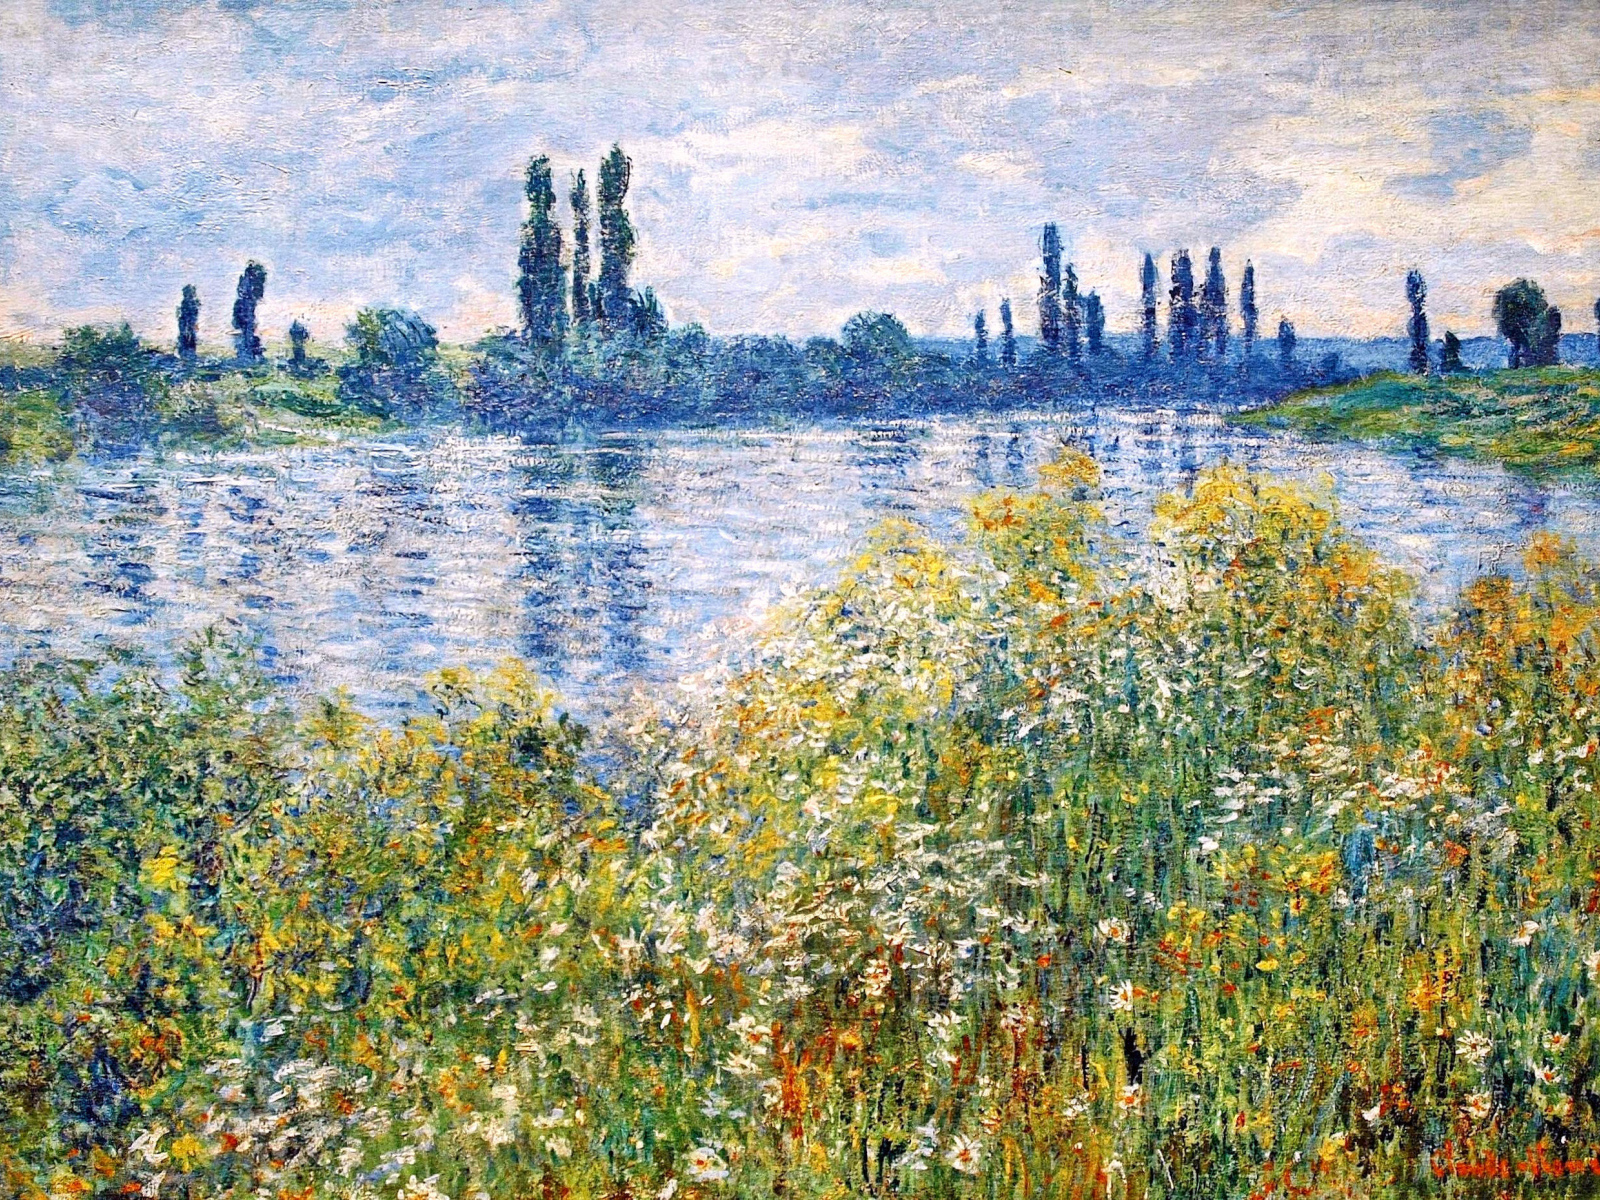 Painting Monet - Flowers